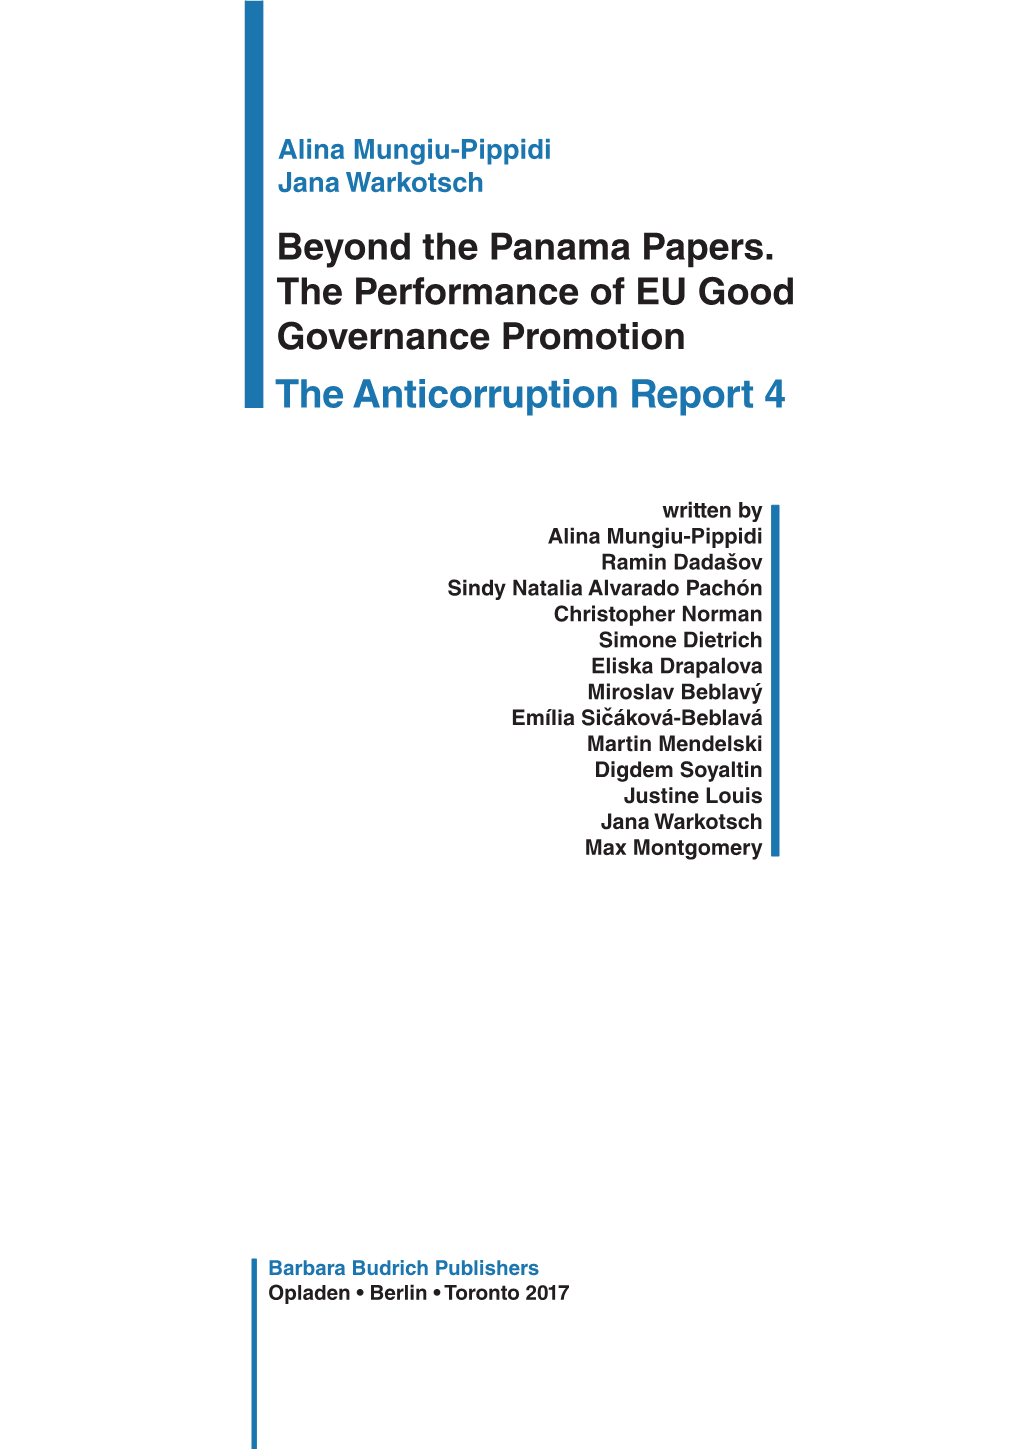 The Anticorruption Report 4